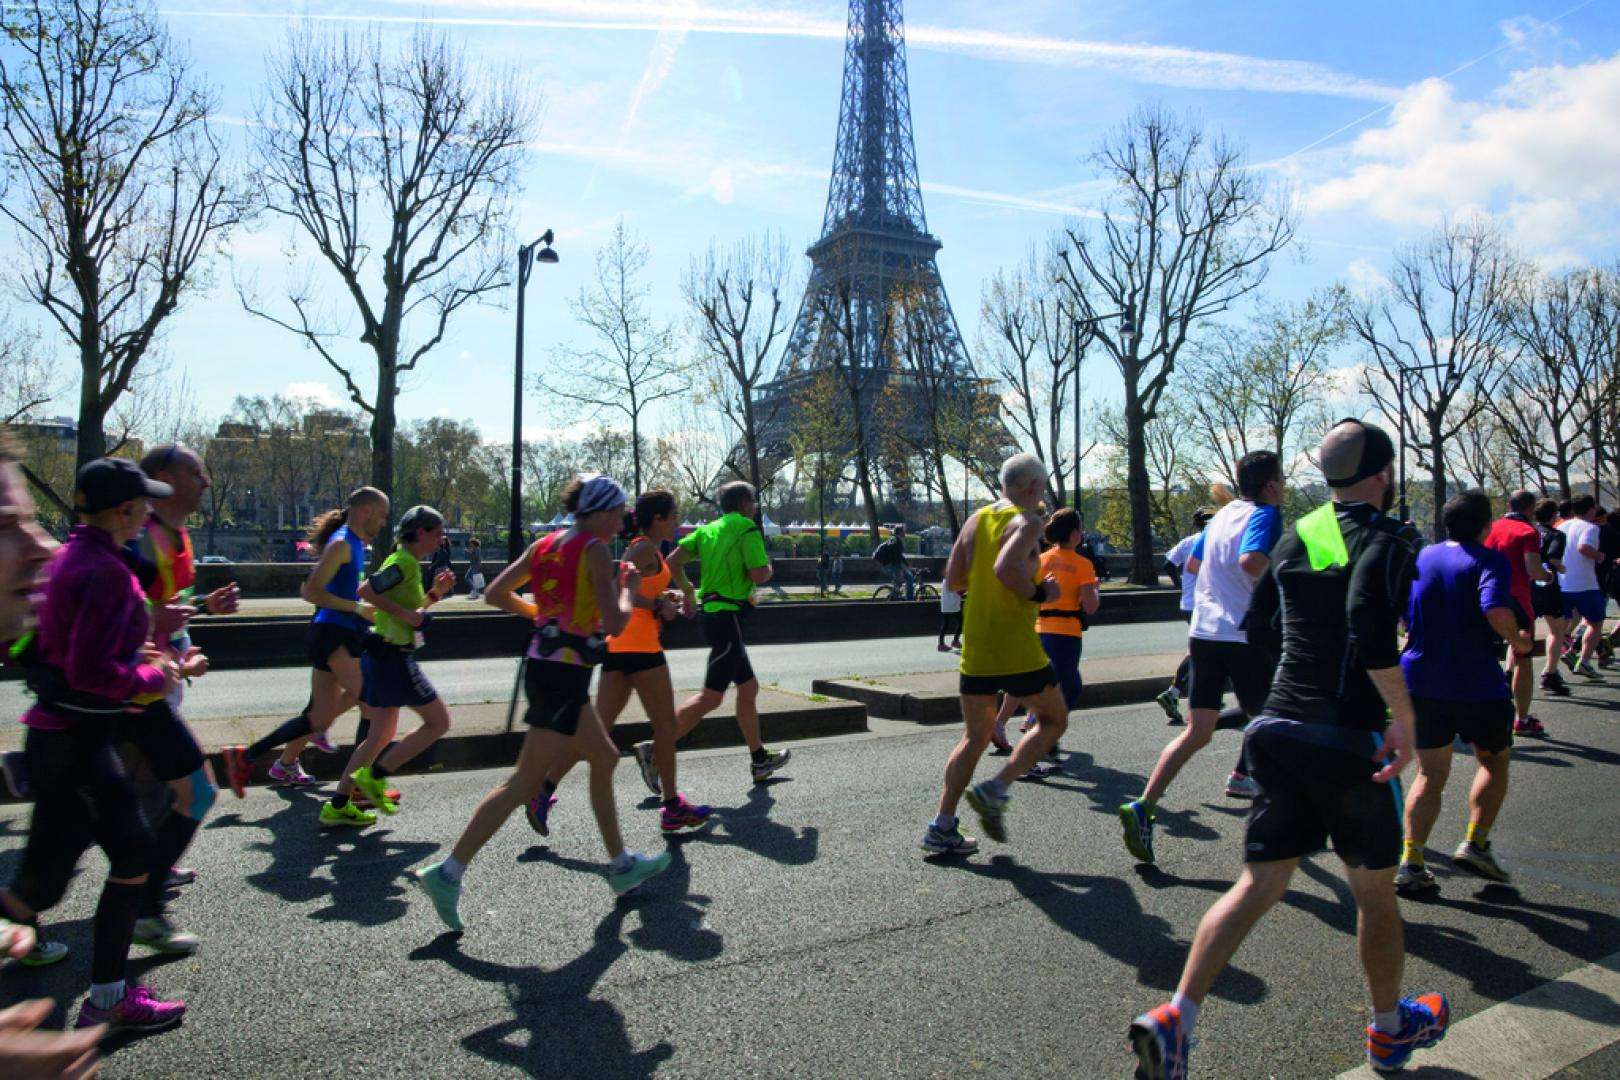 A new edition of the Paris Marathon